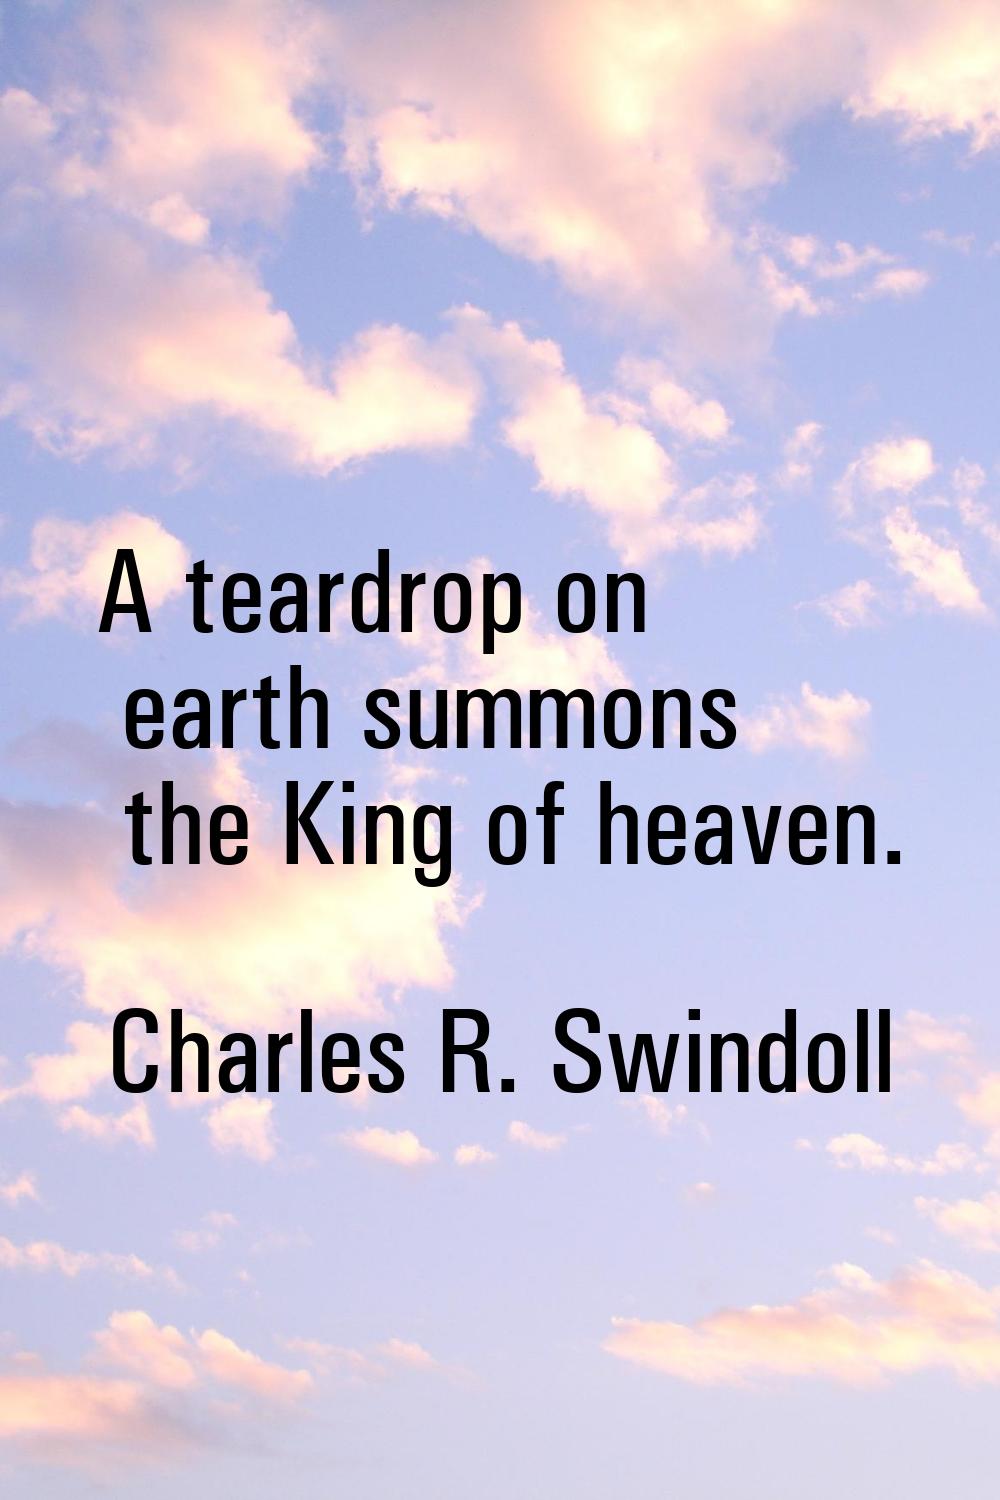 A teardrop on earth summons the King of heaven.